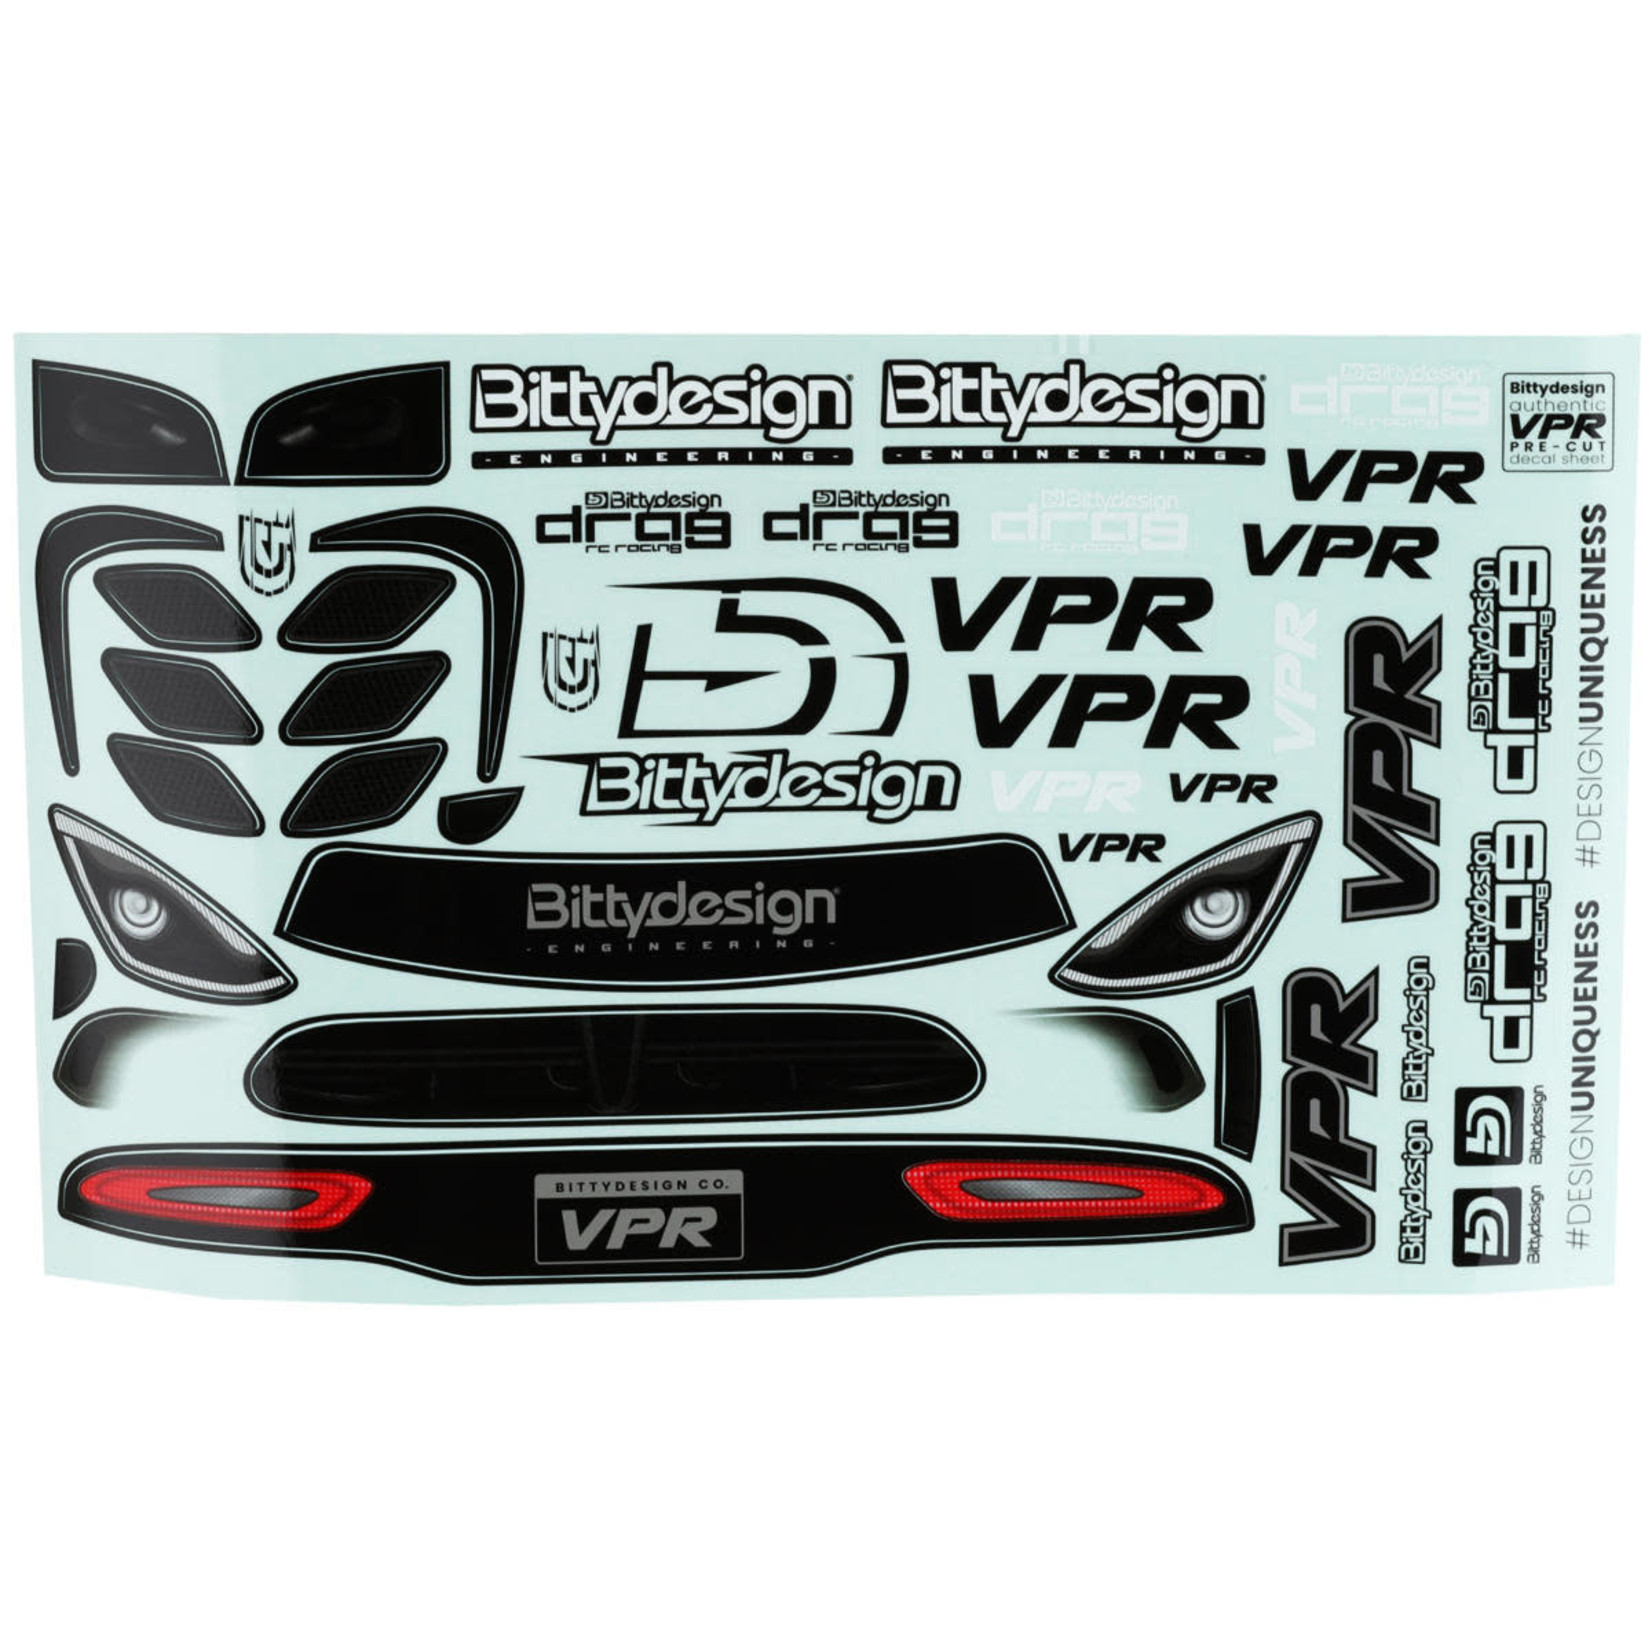 Bittydesign Bittydesign VPR 1/10 Pro No Prep Street Eliminator Drag Racing Body (Clear) #BDDG-VPR